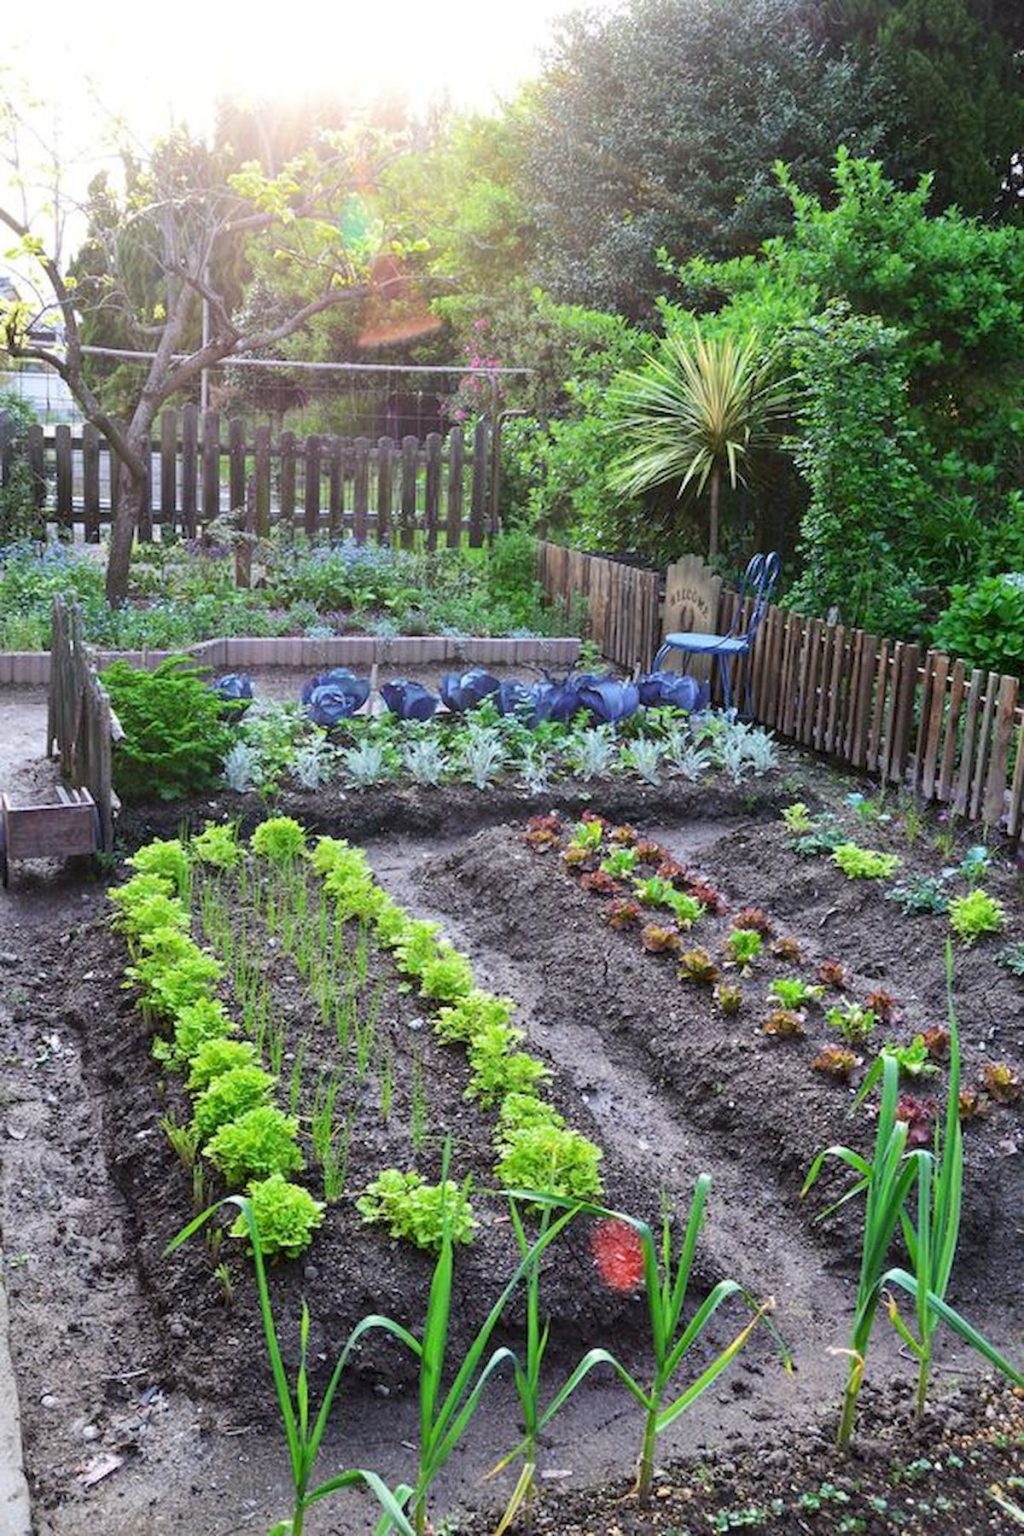  large vegetable garden design ideas